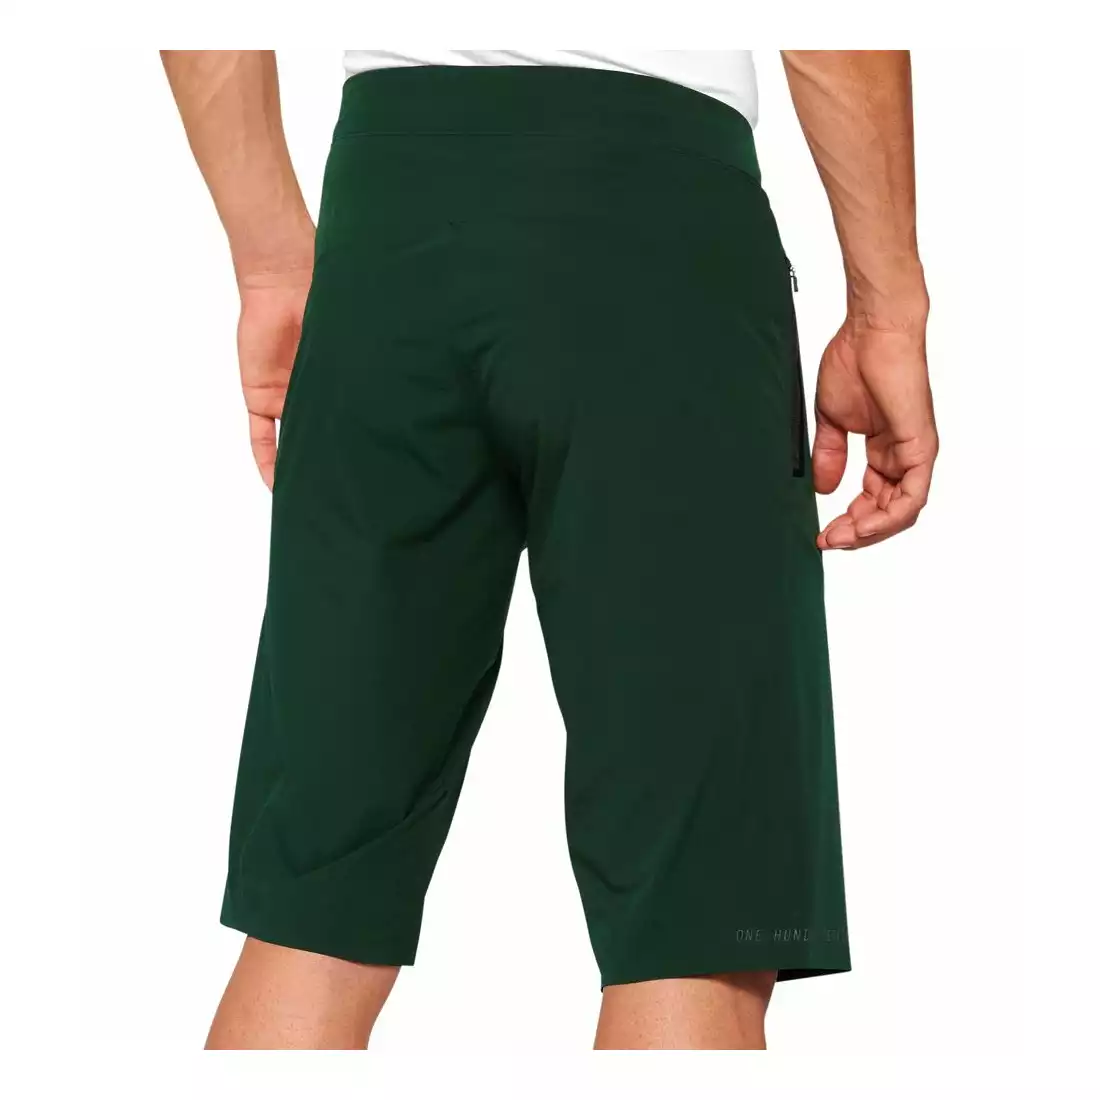 100% CELIUM Men's cycling shorts, green